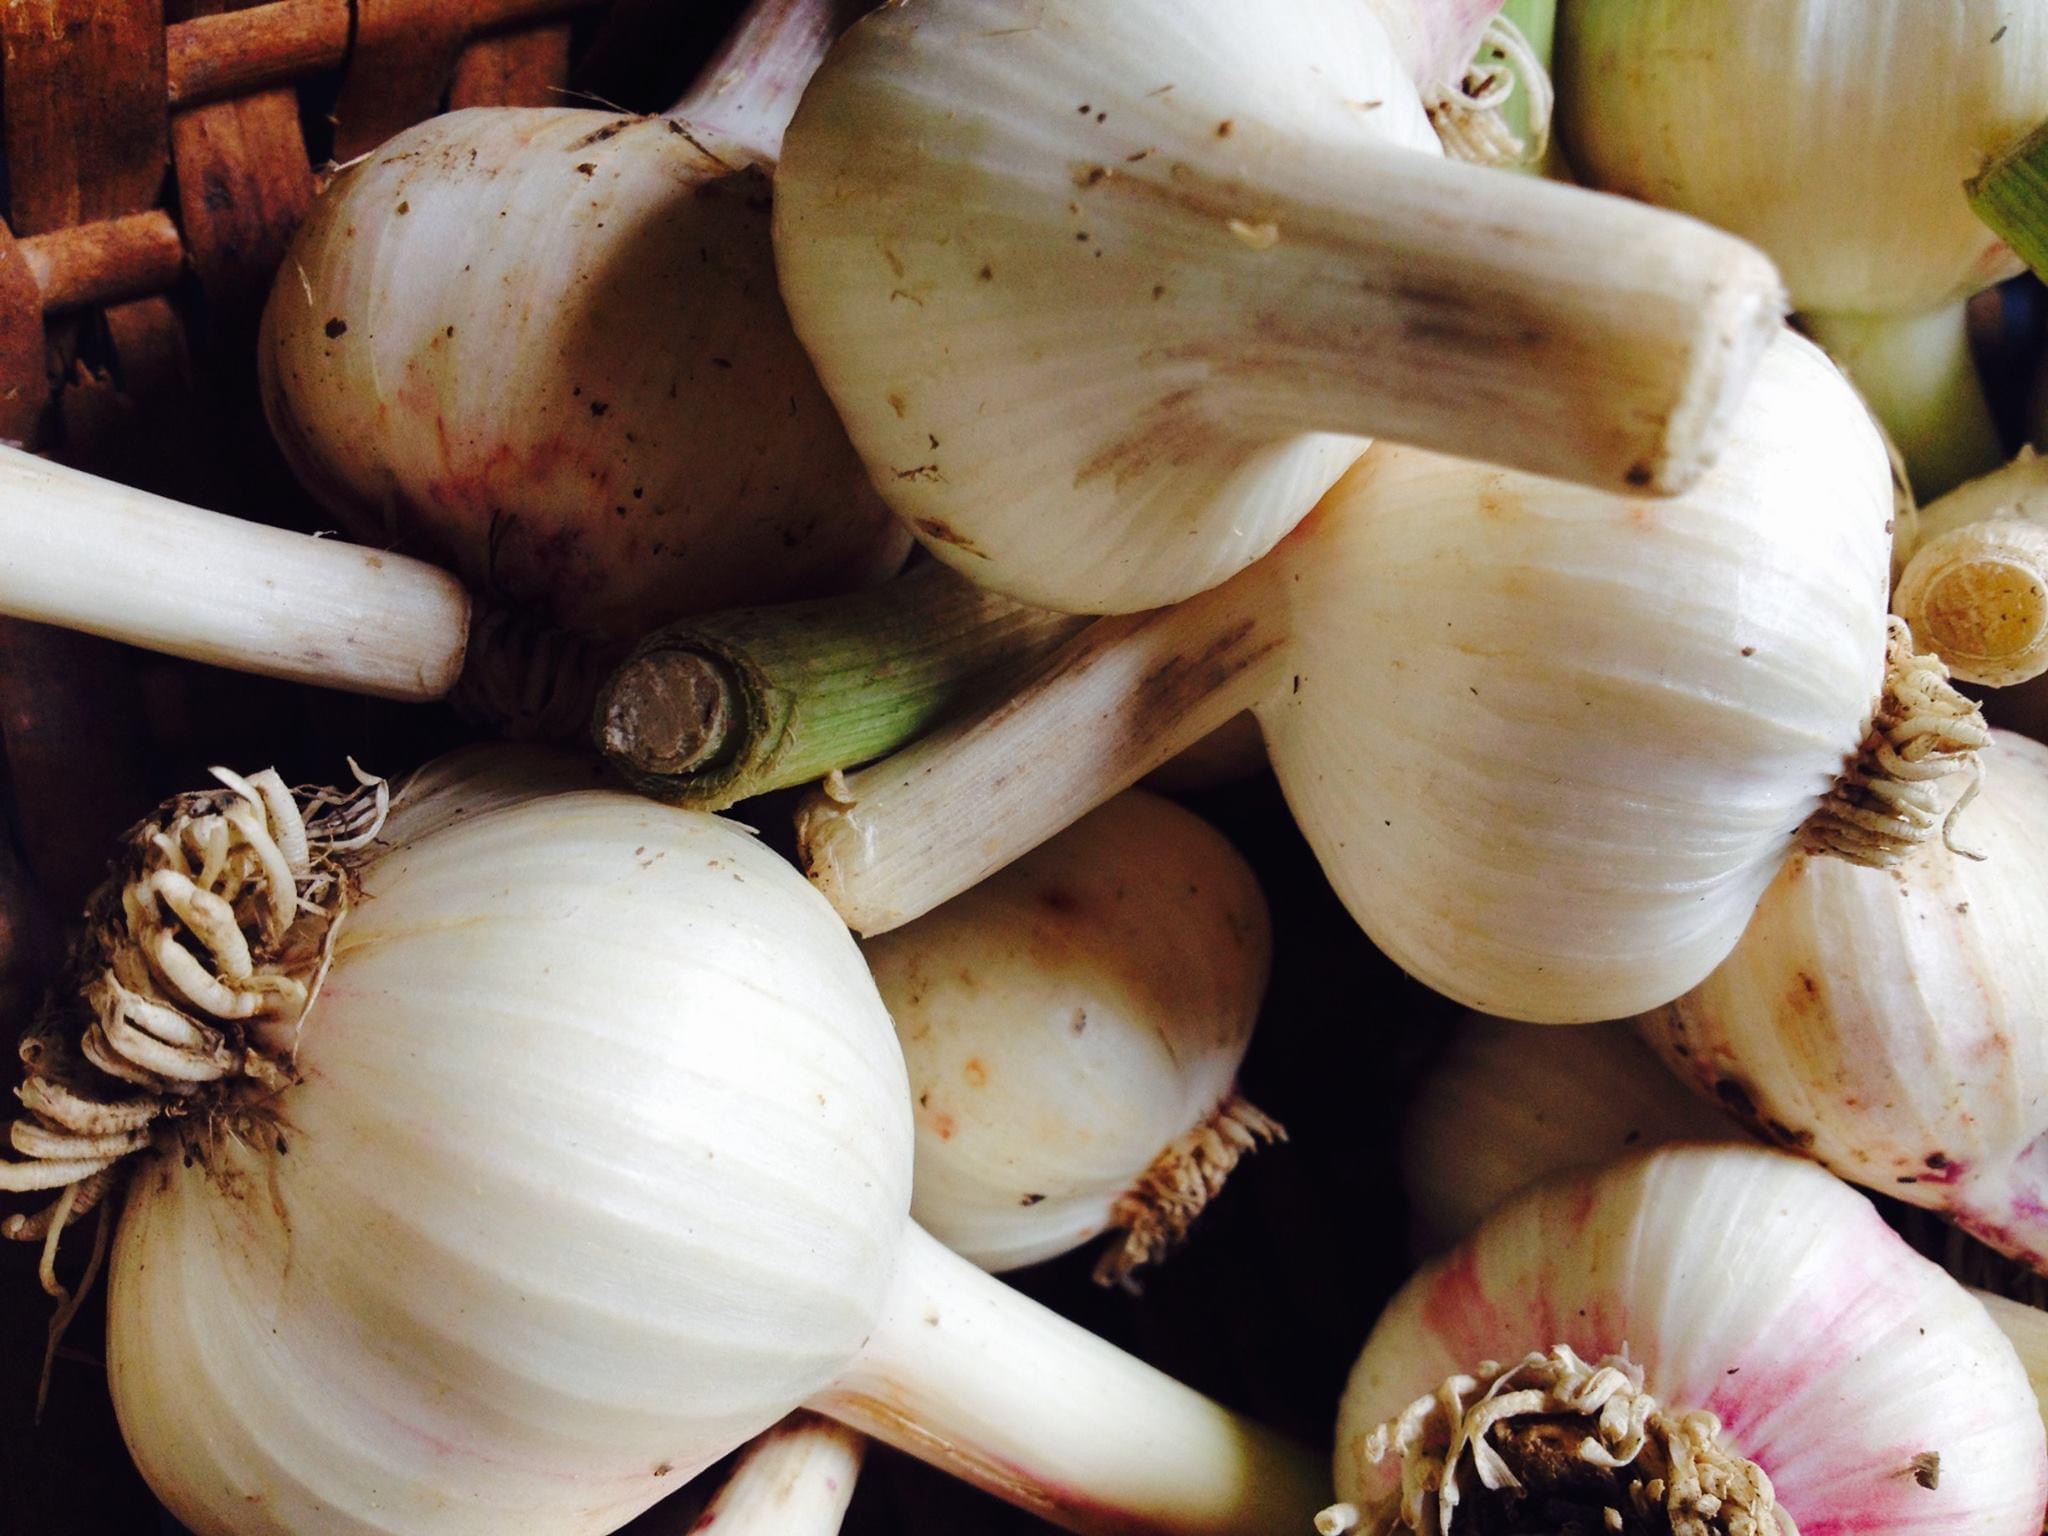 Close up view of garlic cloves.